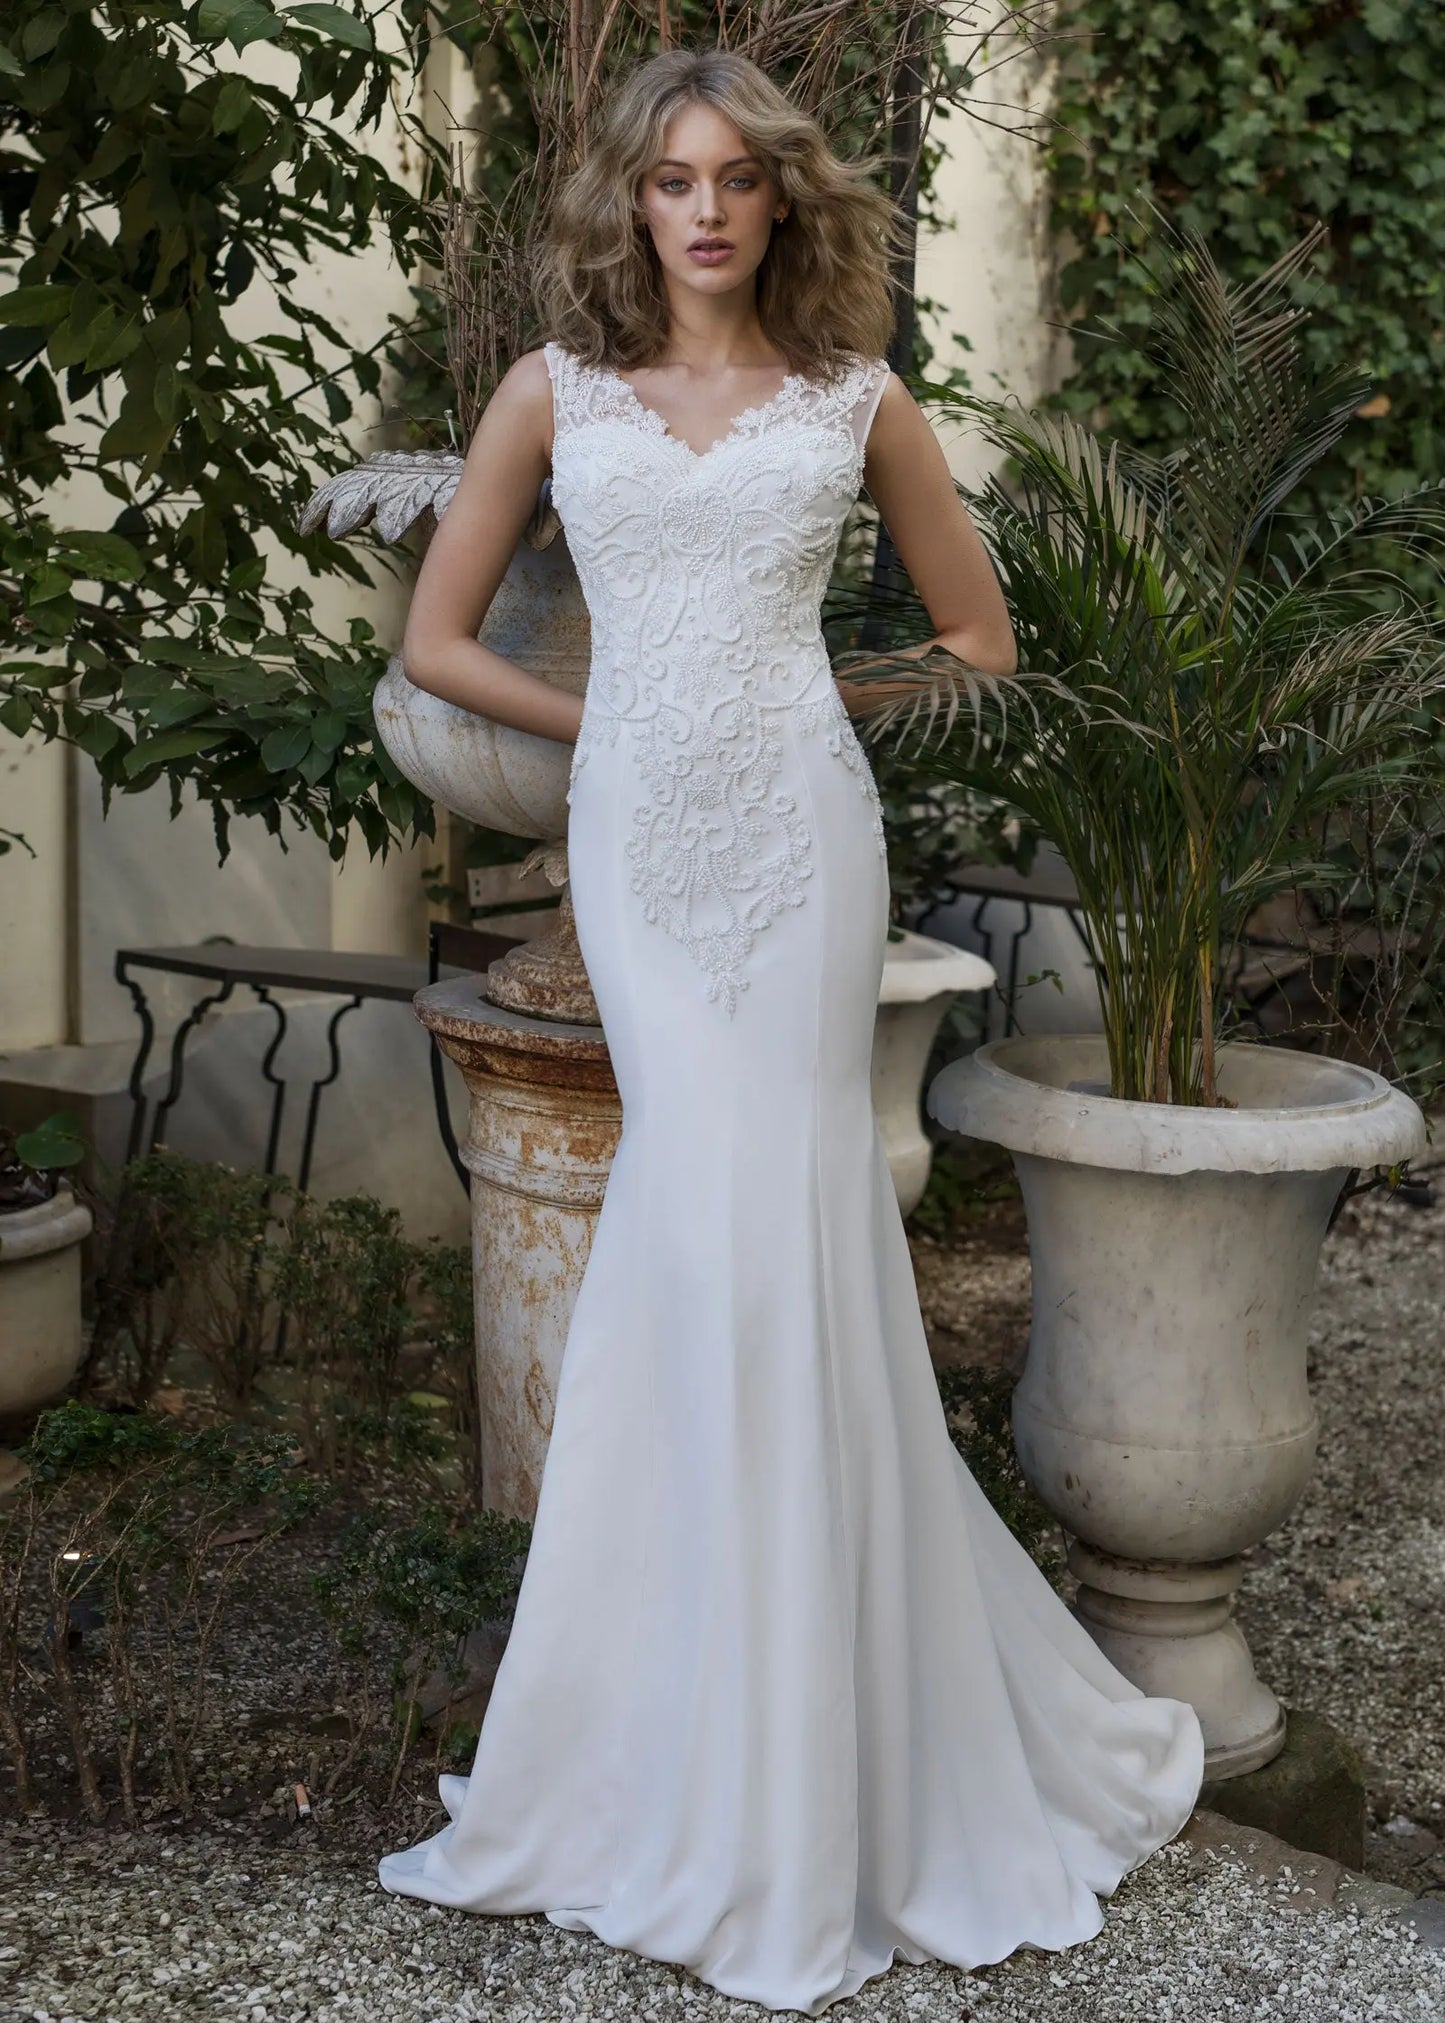 Effortlessly elegant in the AFWHarmony wedding dress.